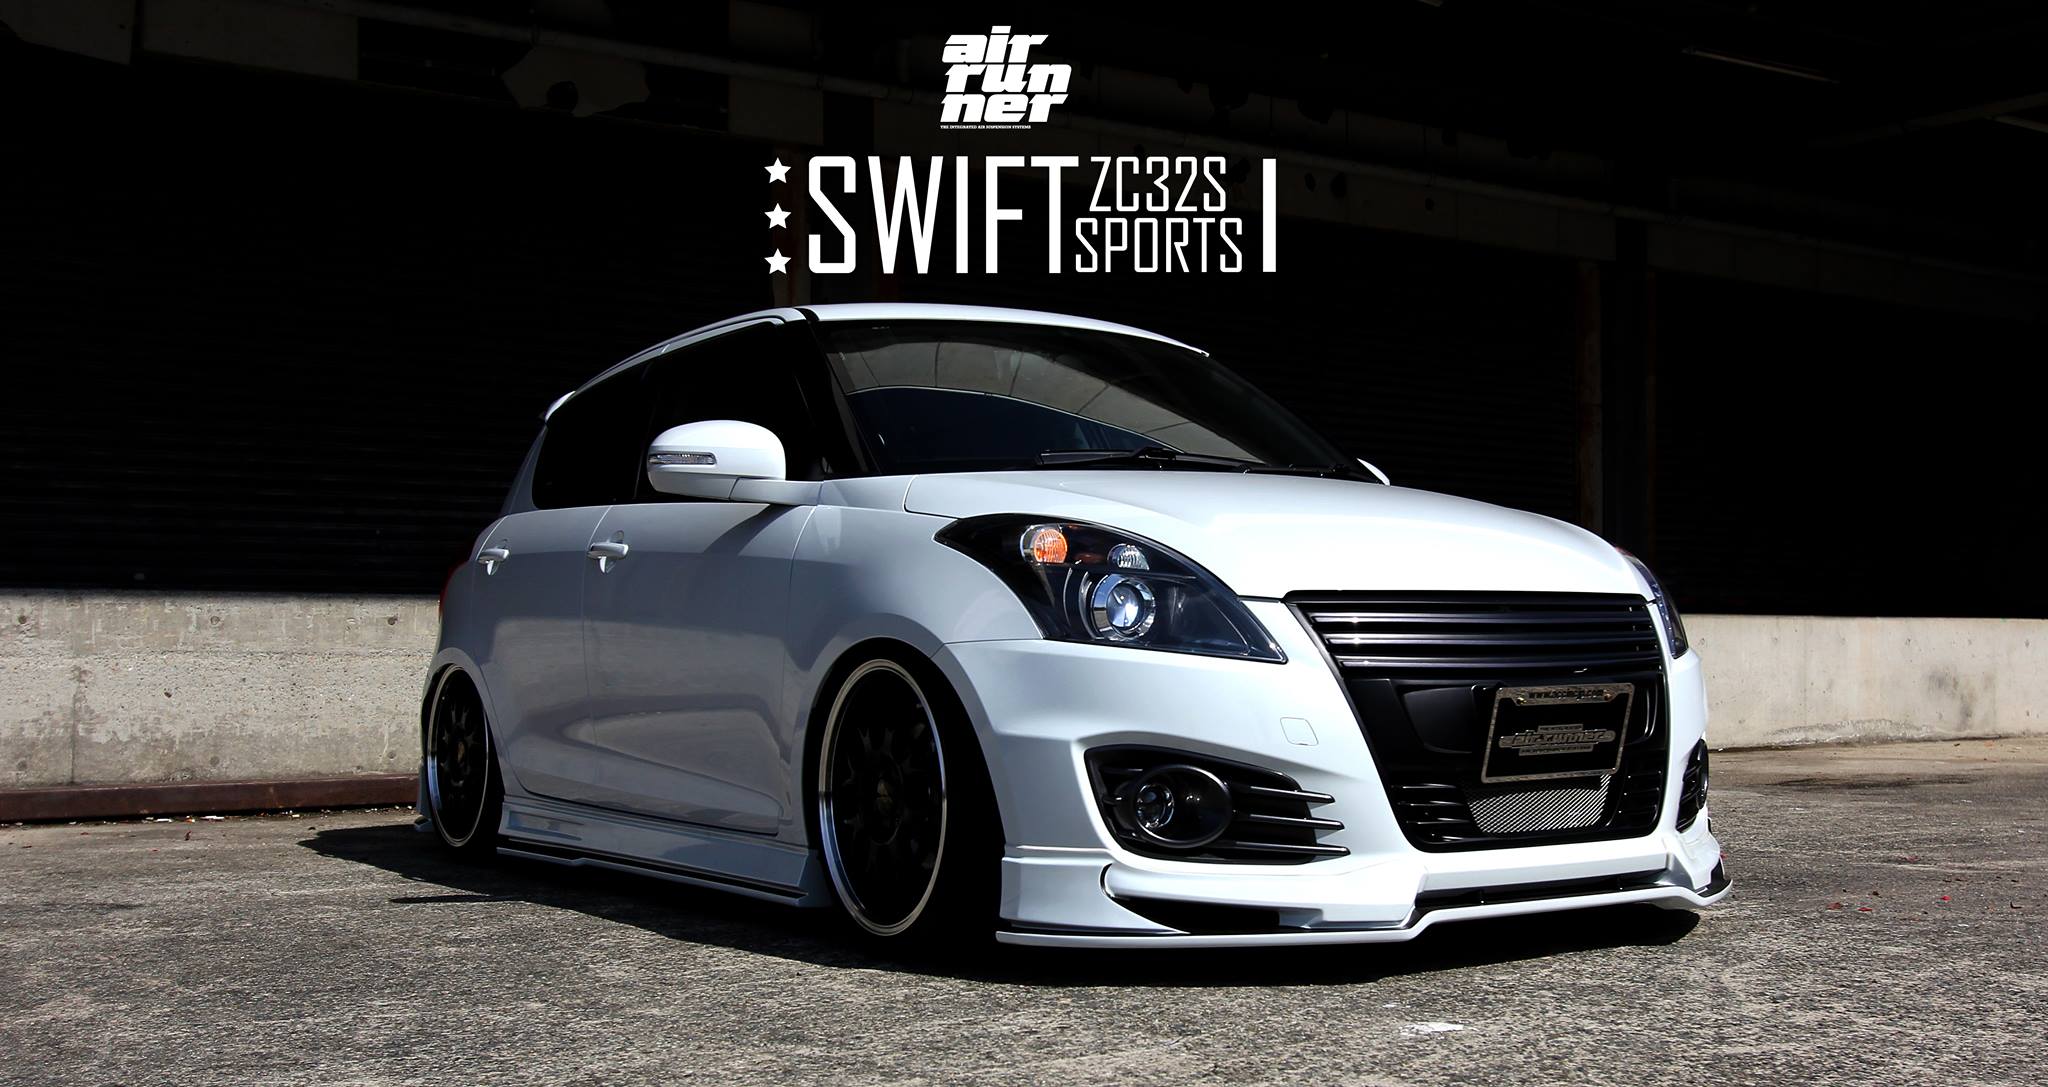 Suzuki Swift Sport Looks Cool with BELi Kit and Air Ride 